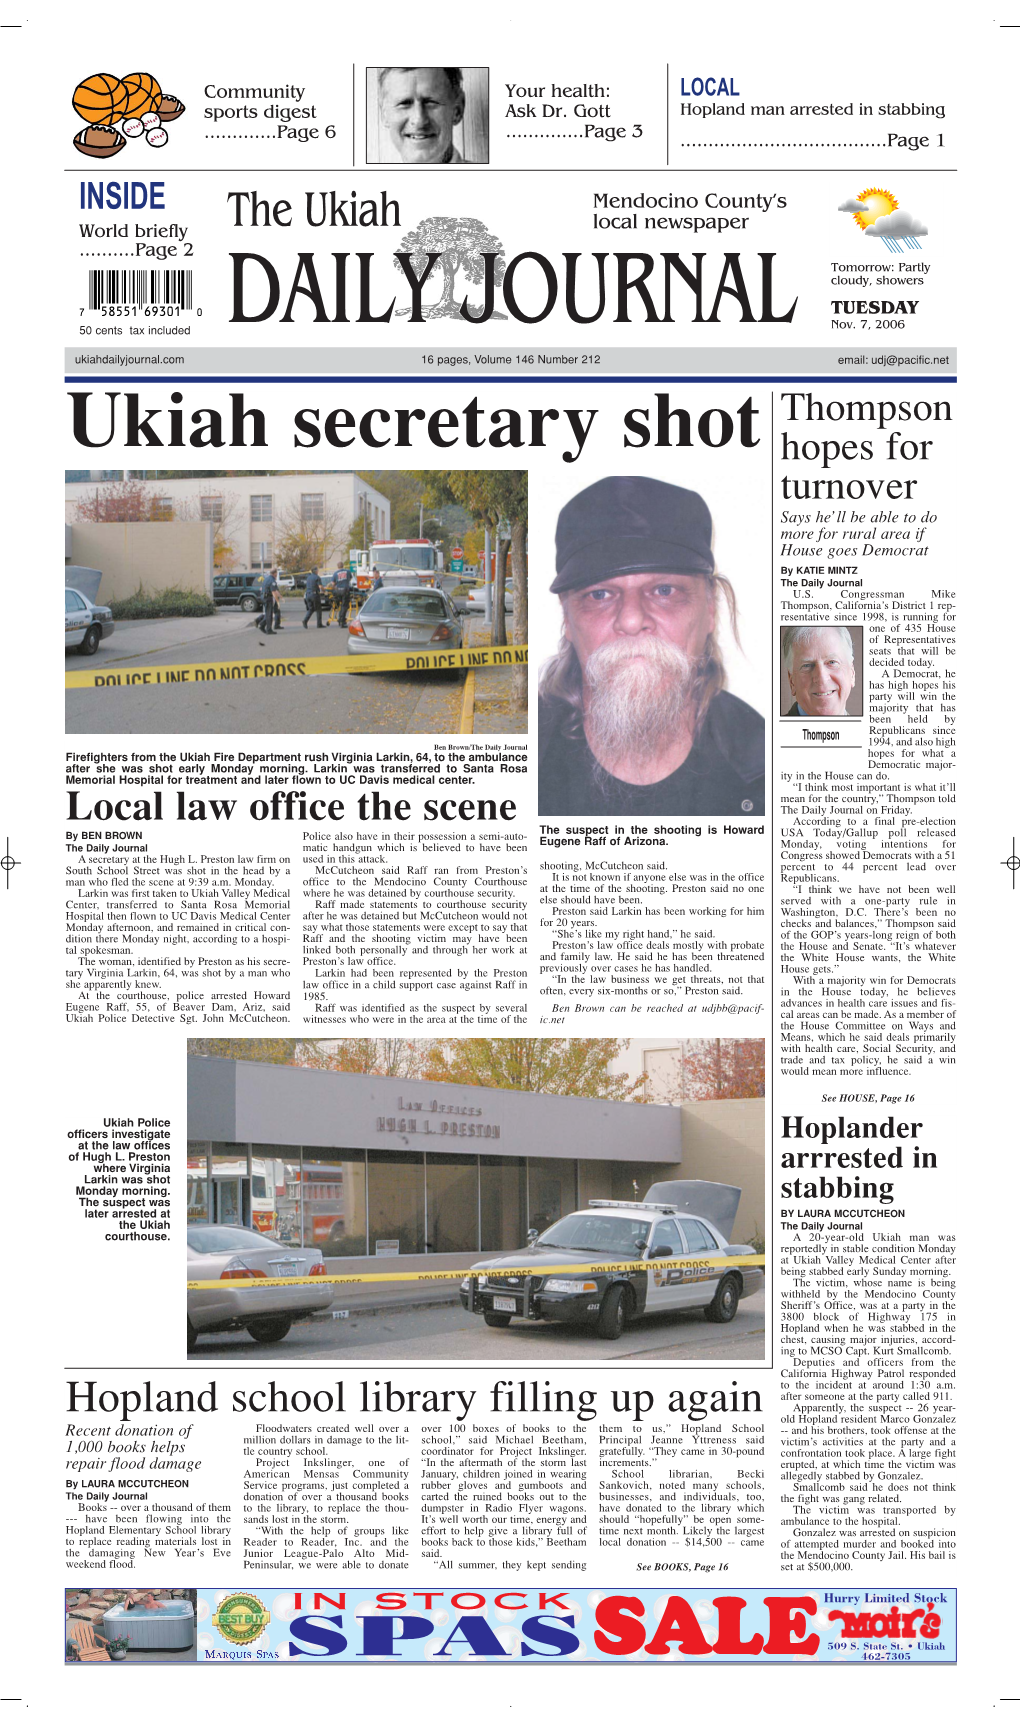 The Ukiah Local Newspaper